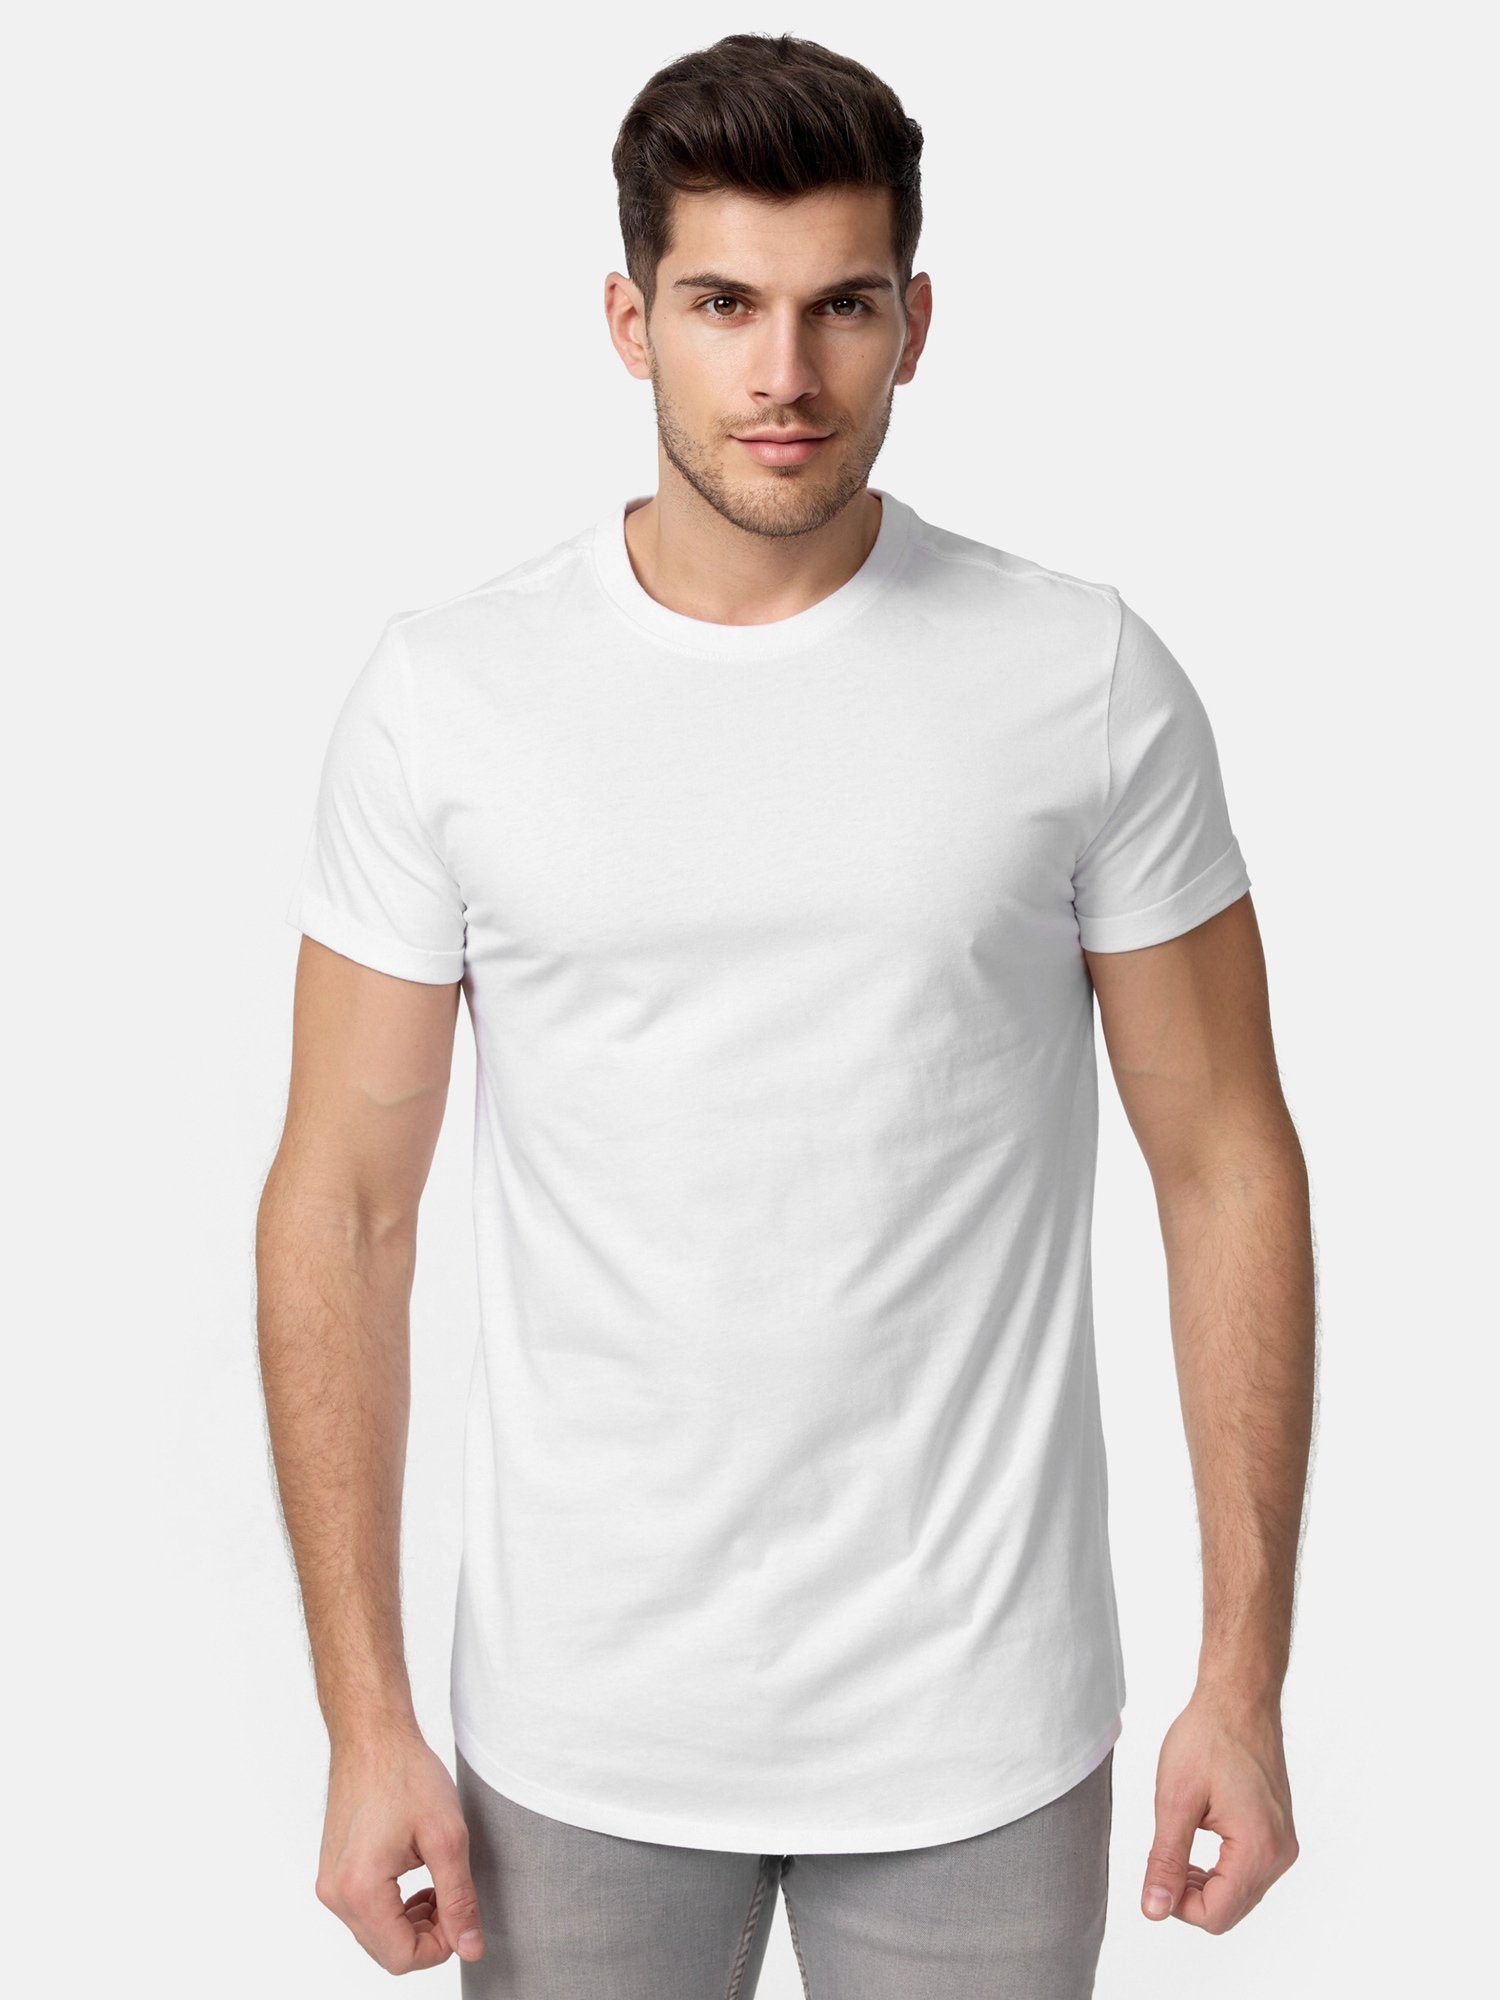 Tazzio T-Shirt E105 Herren Basic Rundhalsshirt weiß